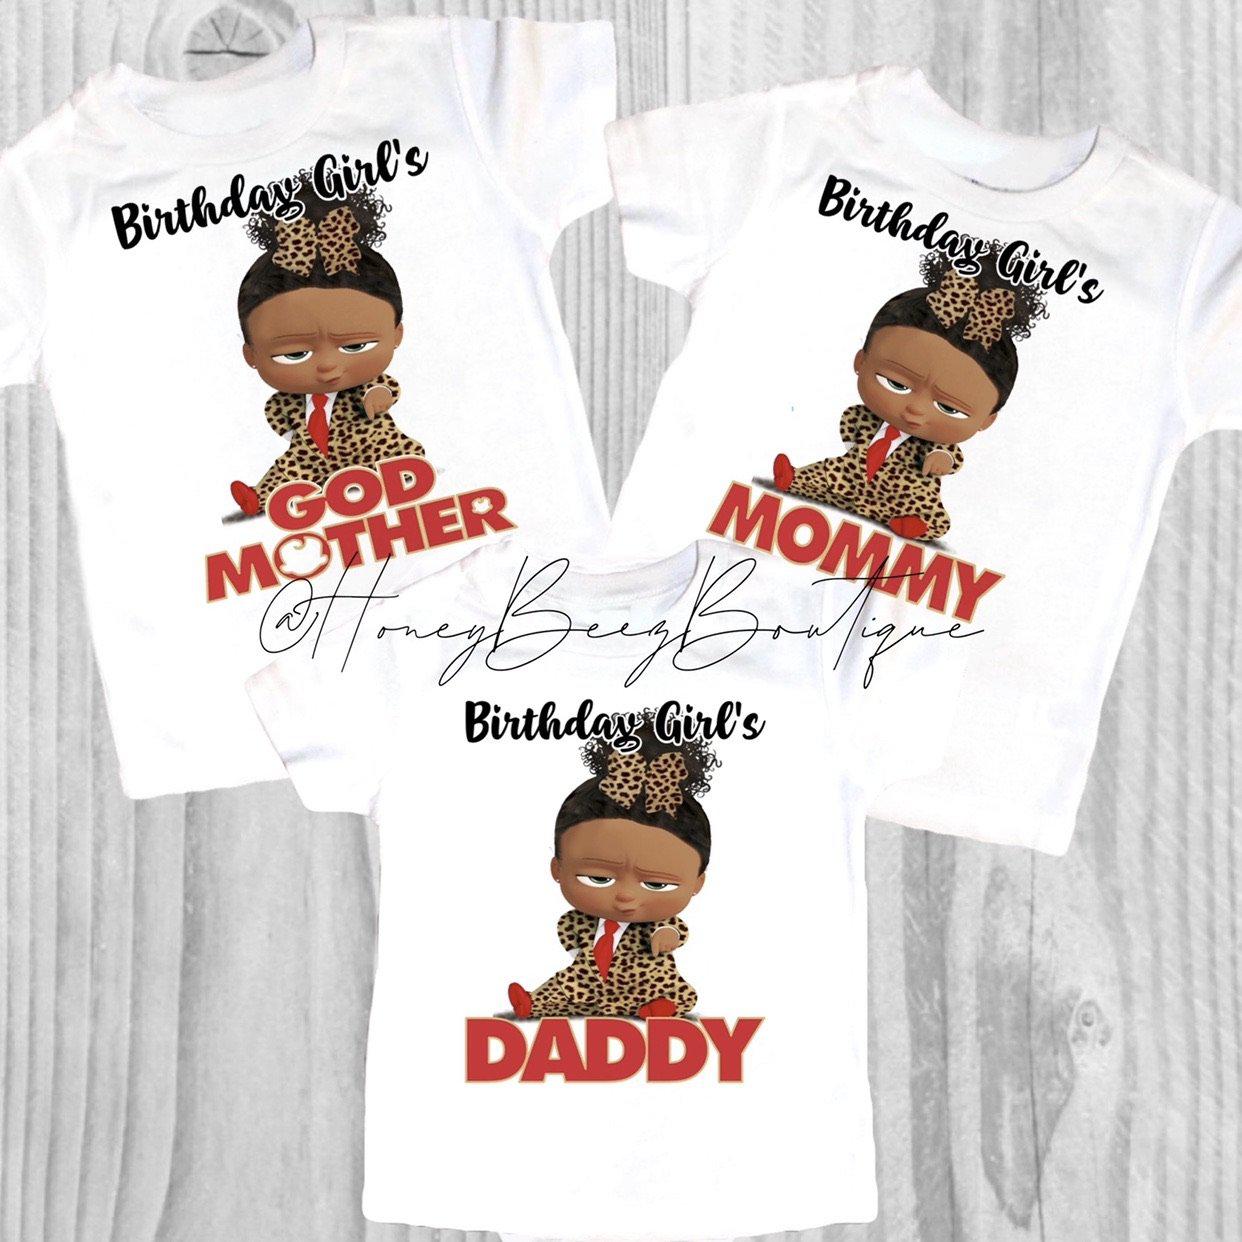 boss baby birthday shirts for girl